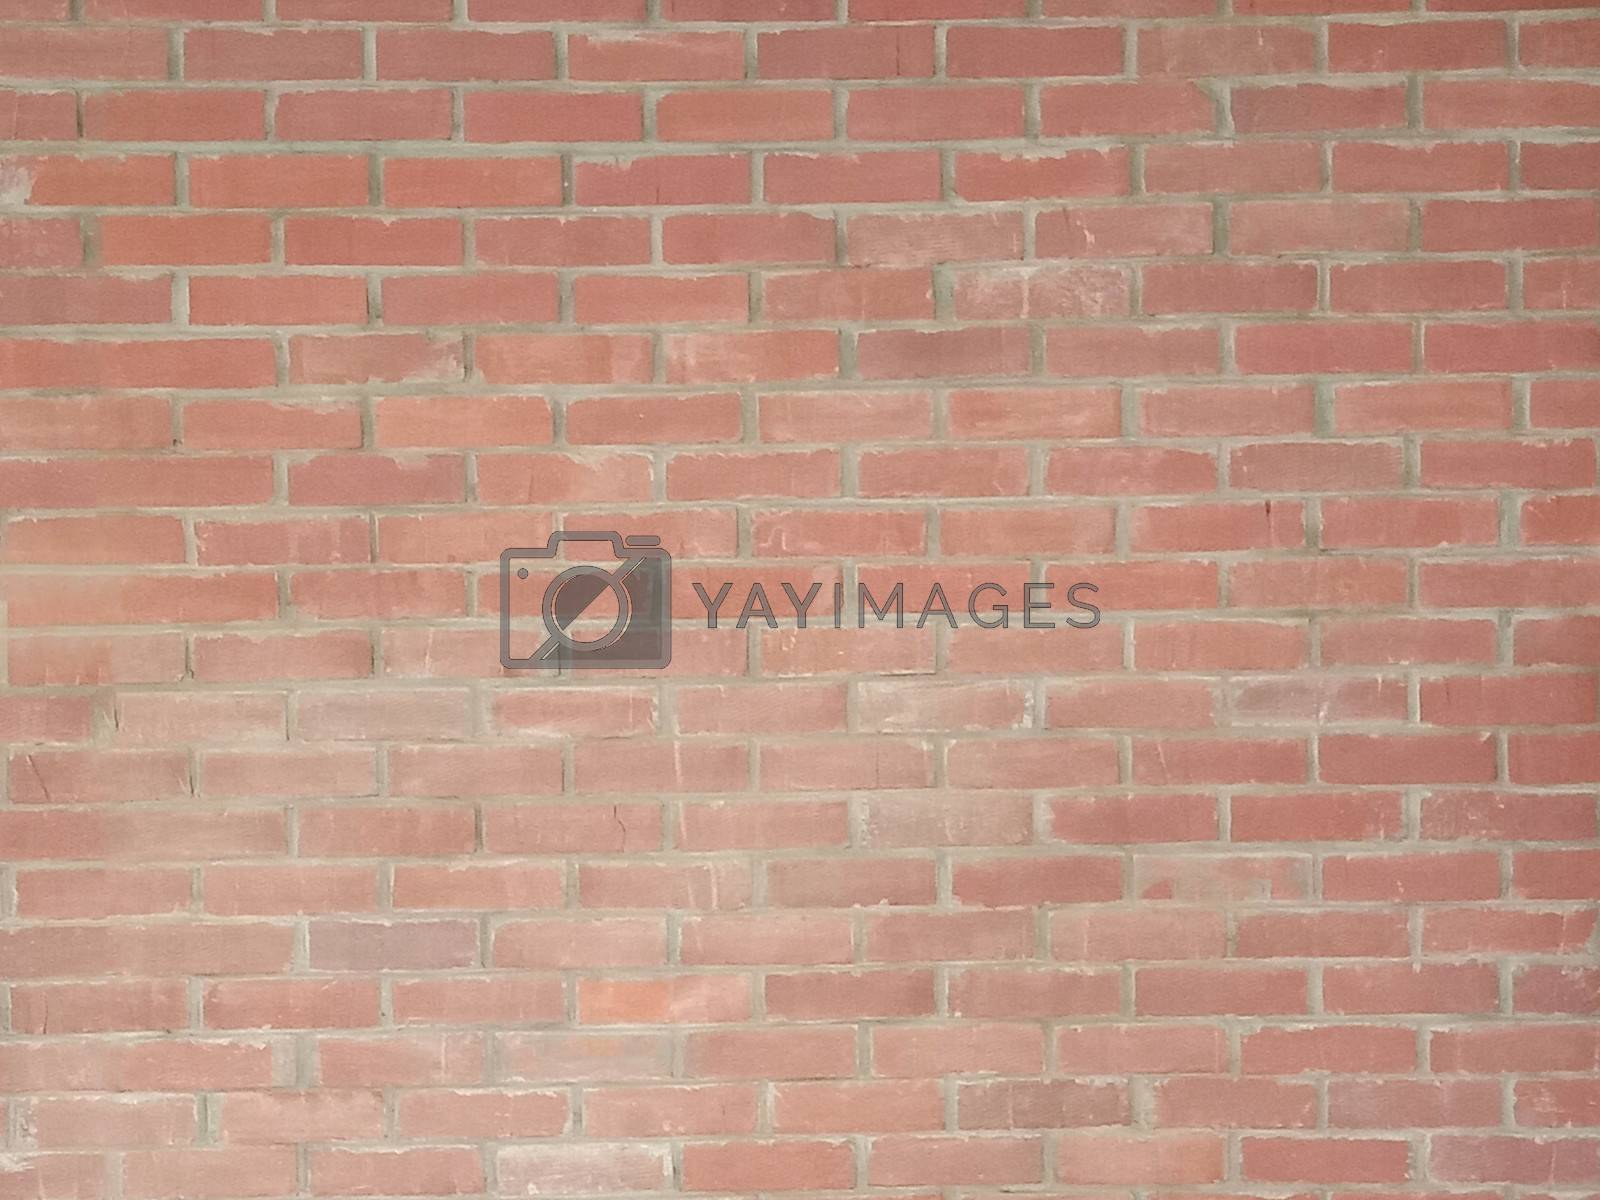 Royalty free image of red colored bricks wall closeup by jahidul2358